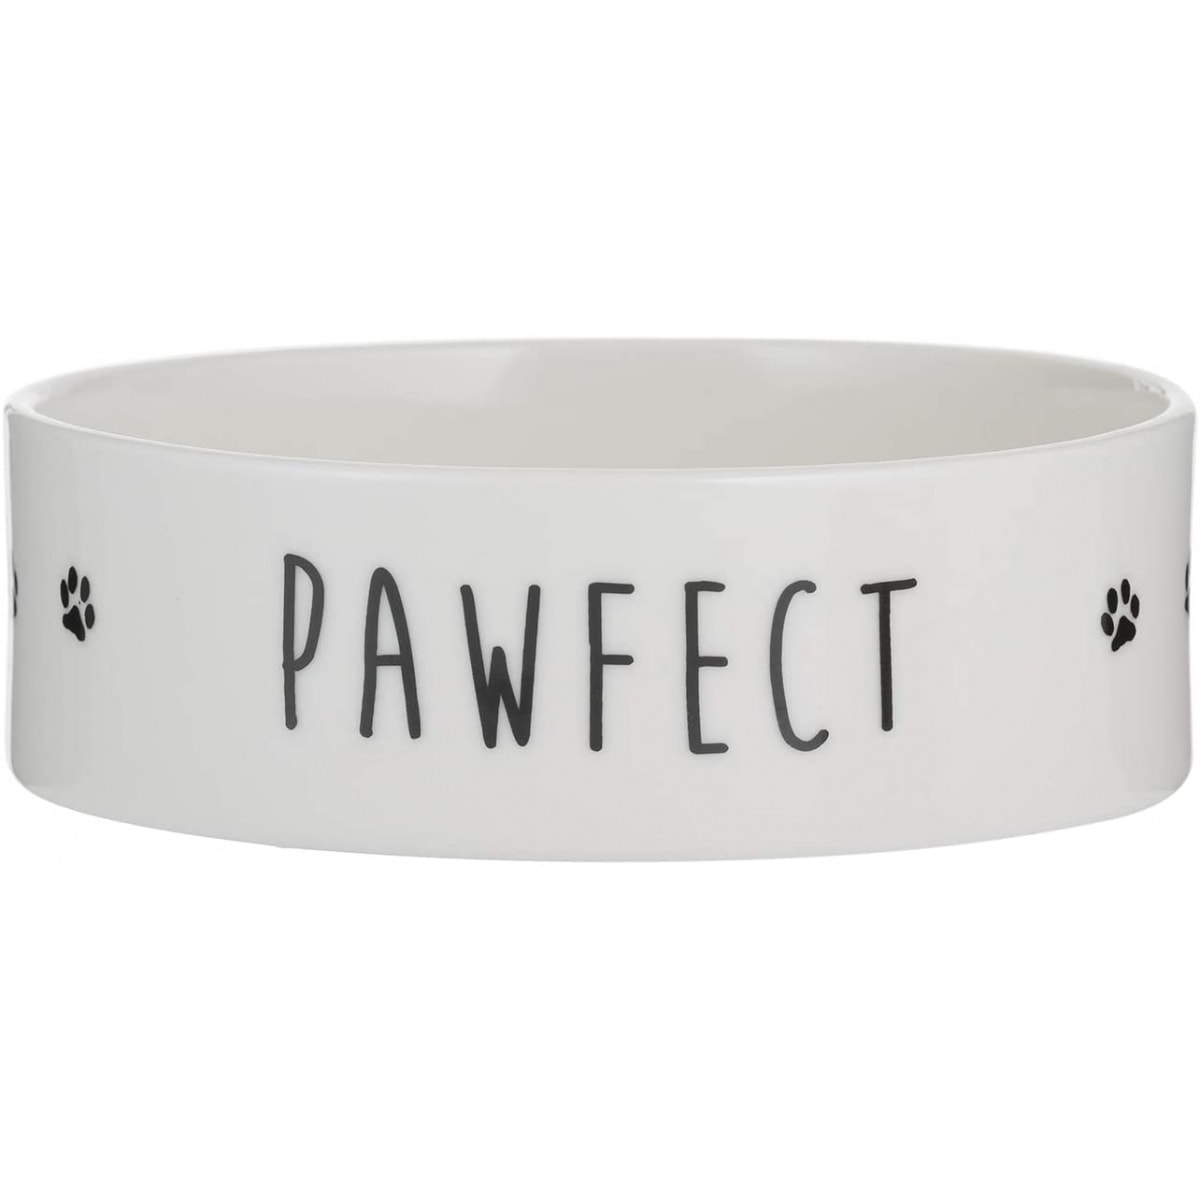 Pawfect Dog Bowl Main Image